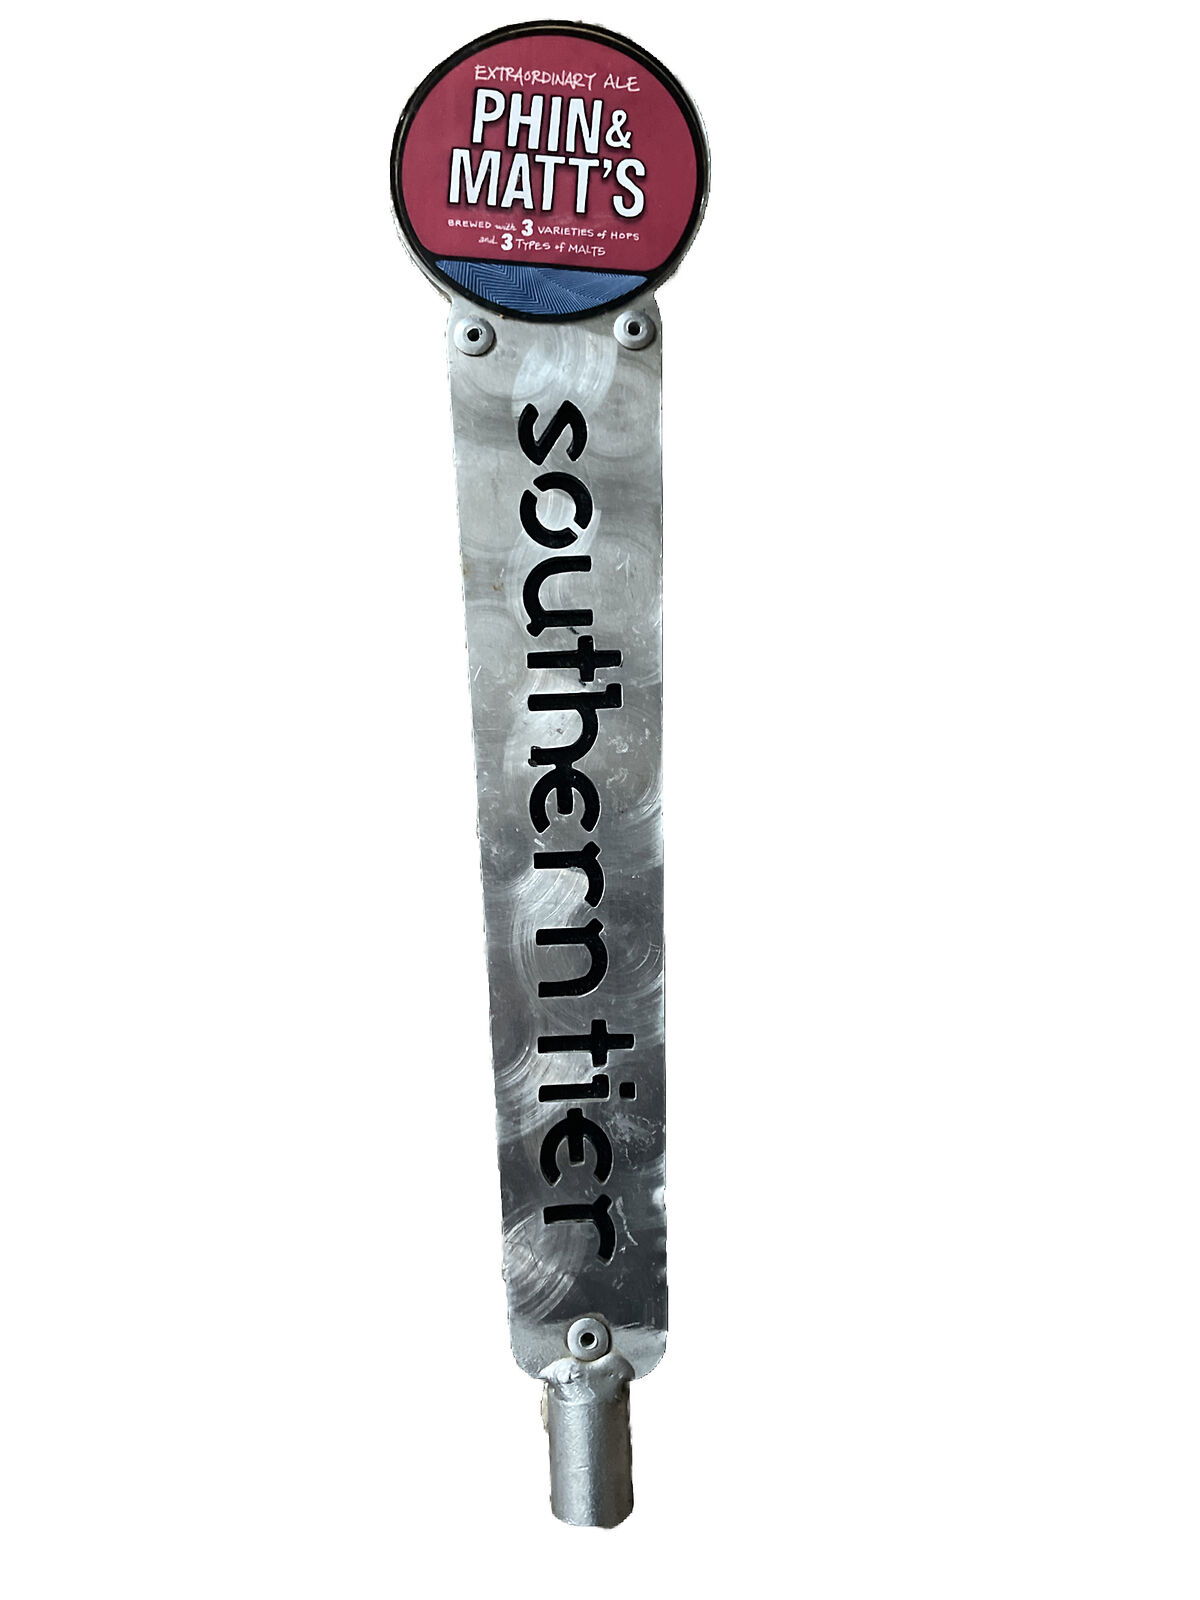 Southern Tier Tap Handle Draft Beer Phin & Matt’s Extraordinary Ale MachinedFace